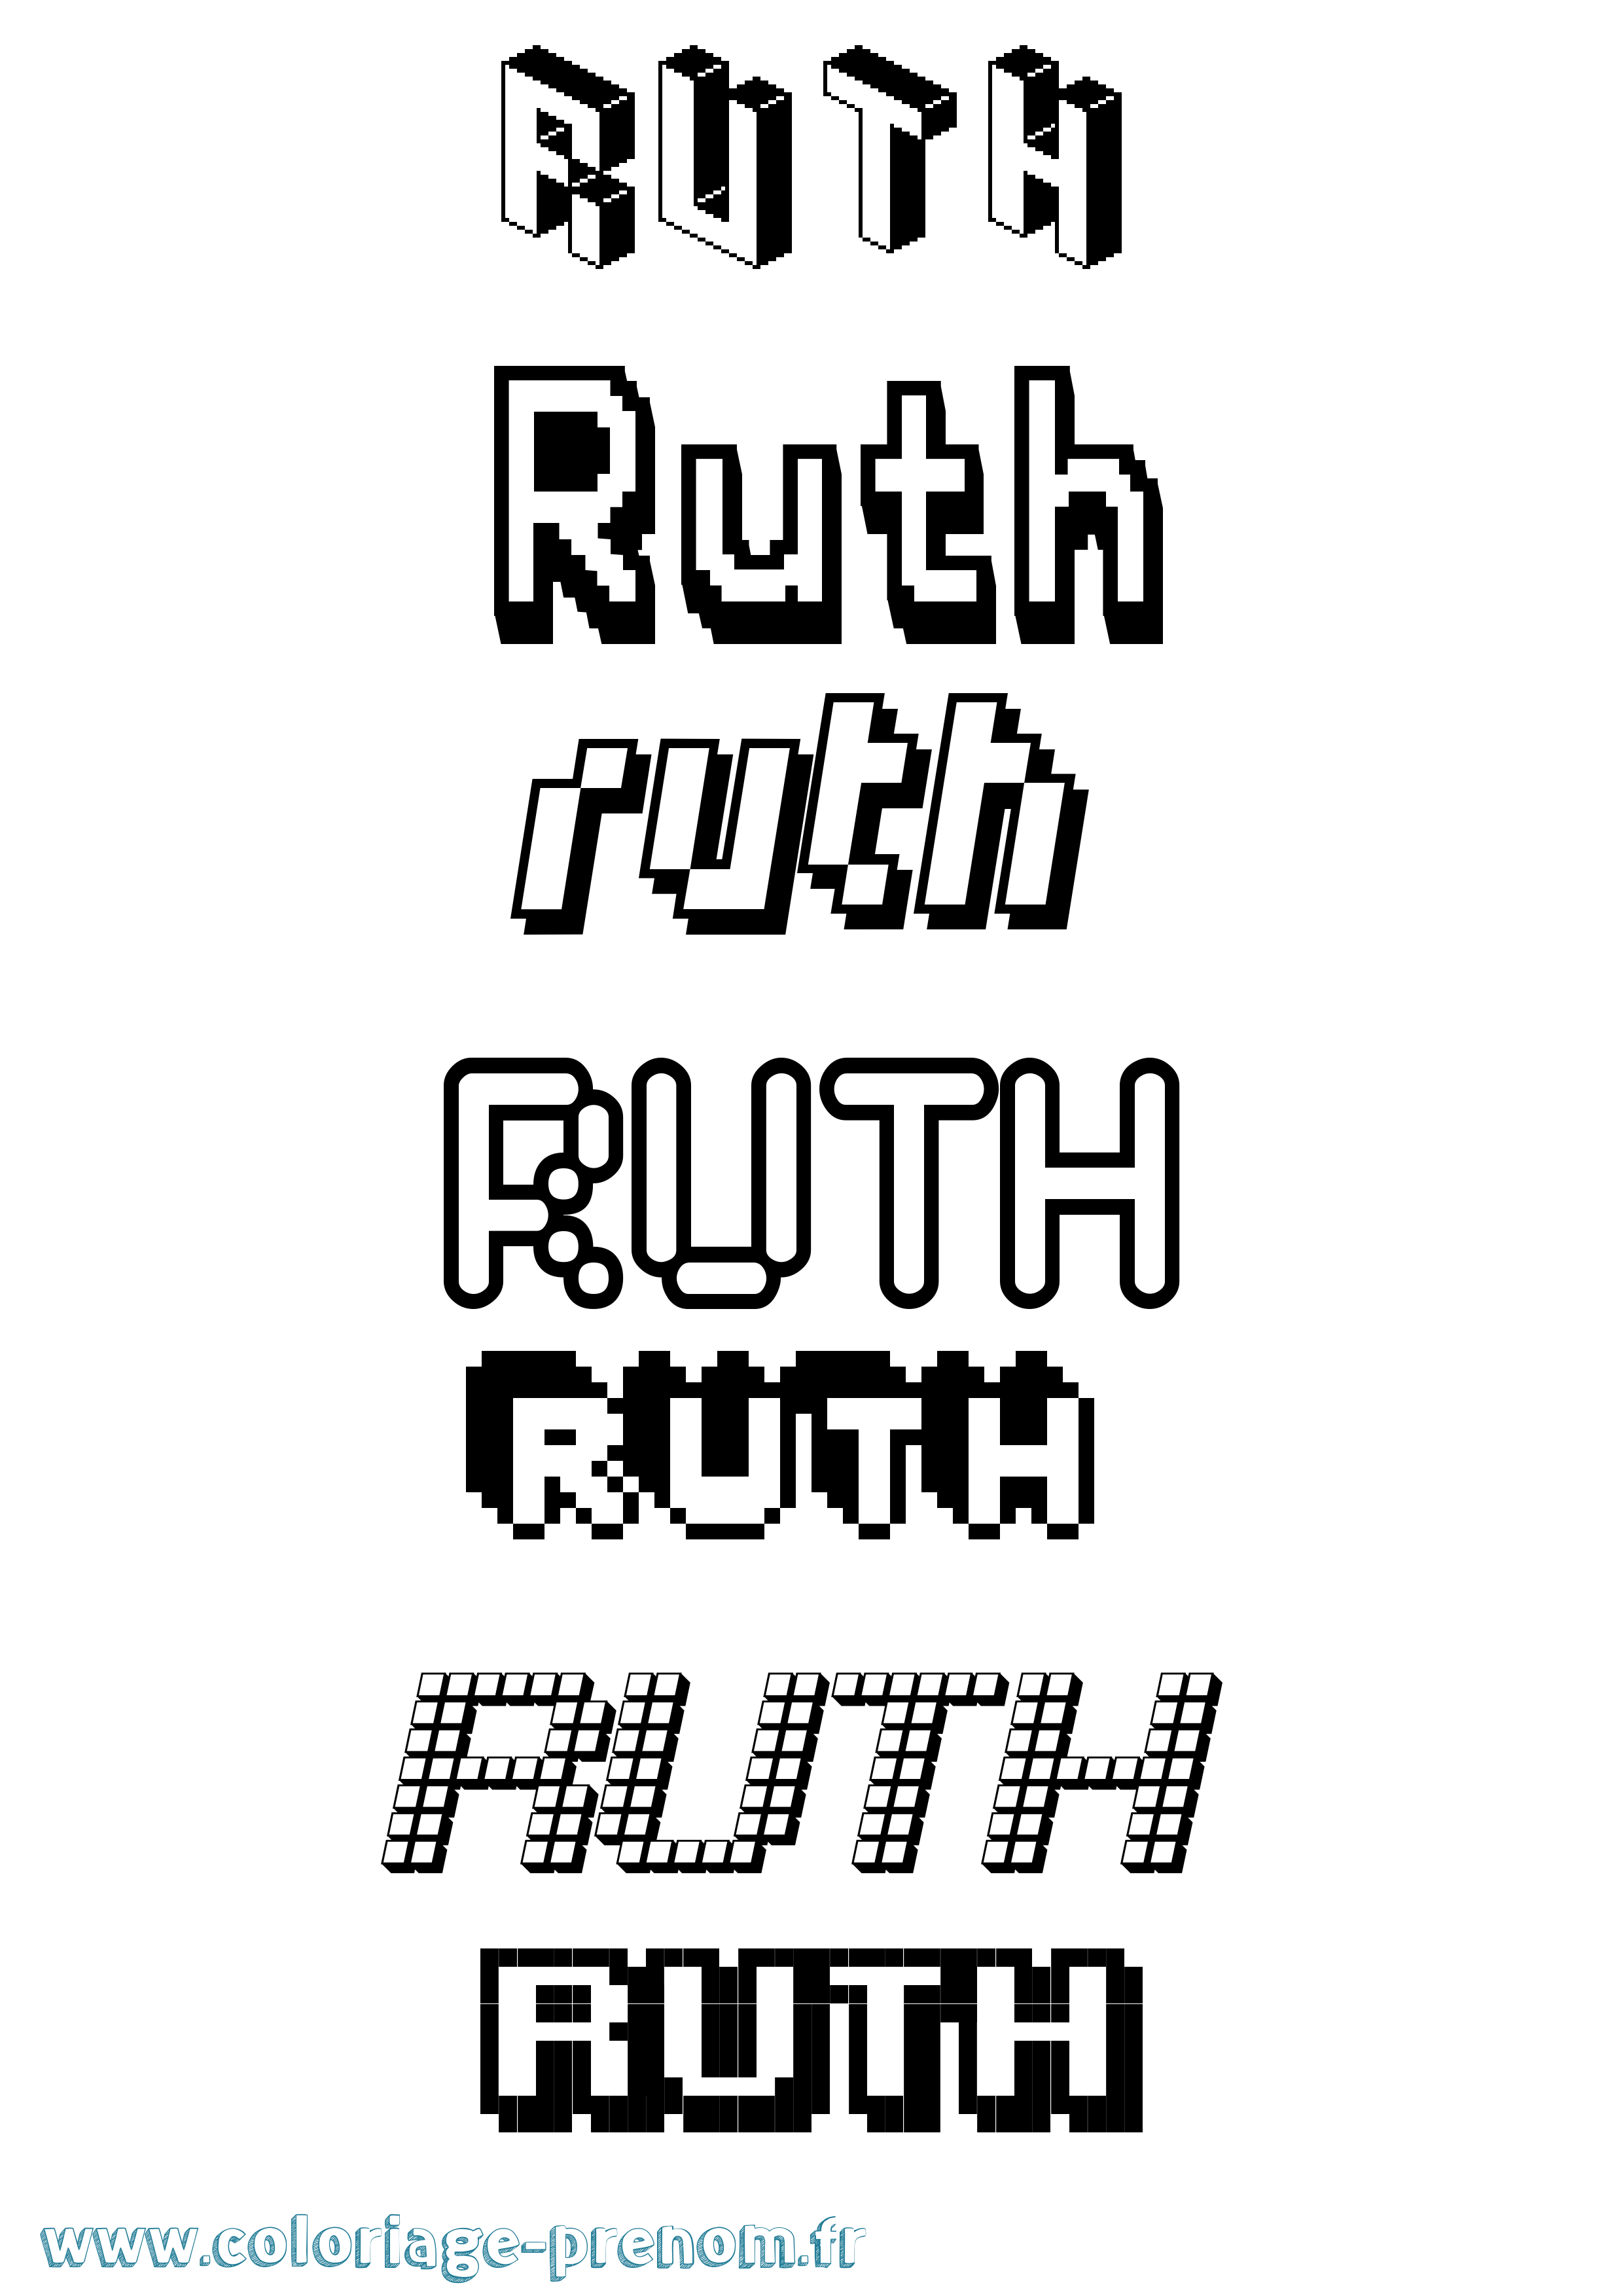 Coloriage prénom Ruth Pixel